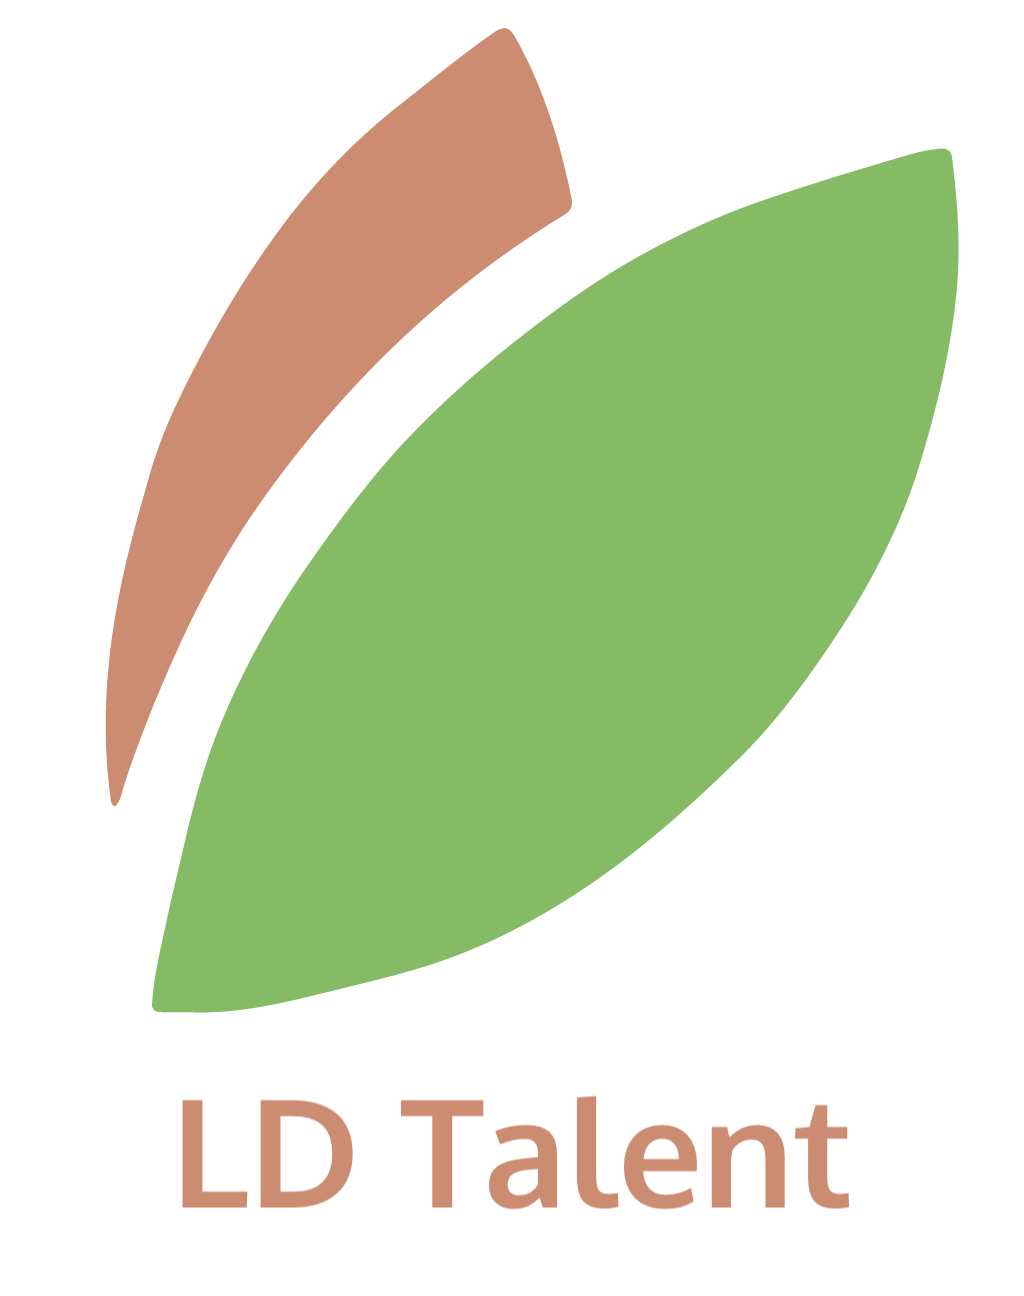 LD Talent footer logo